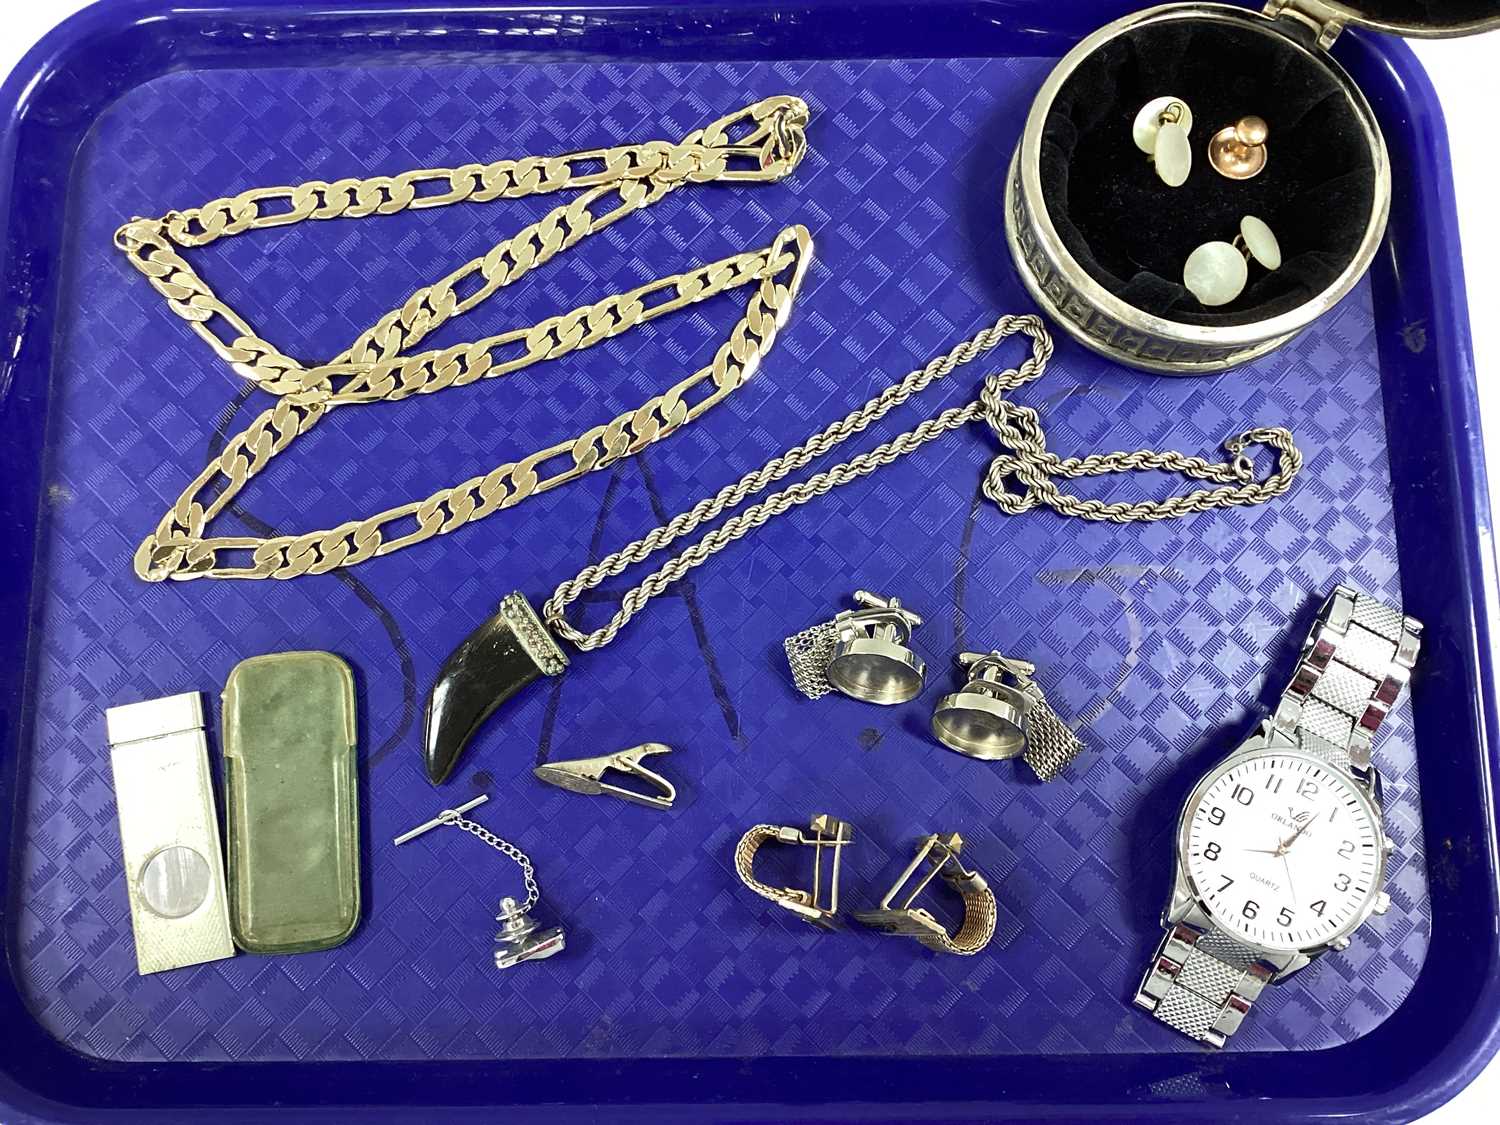 A Cigar Cutter, cufflinks and Mexican style tie clip, chains, dress stud, circular trinket box,